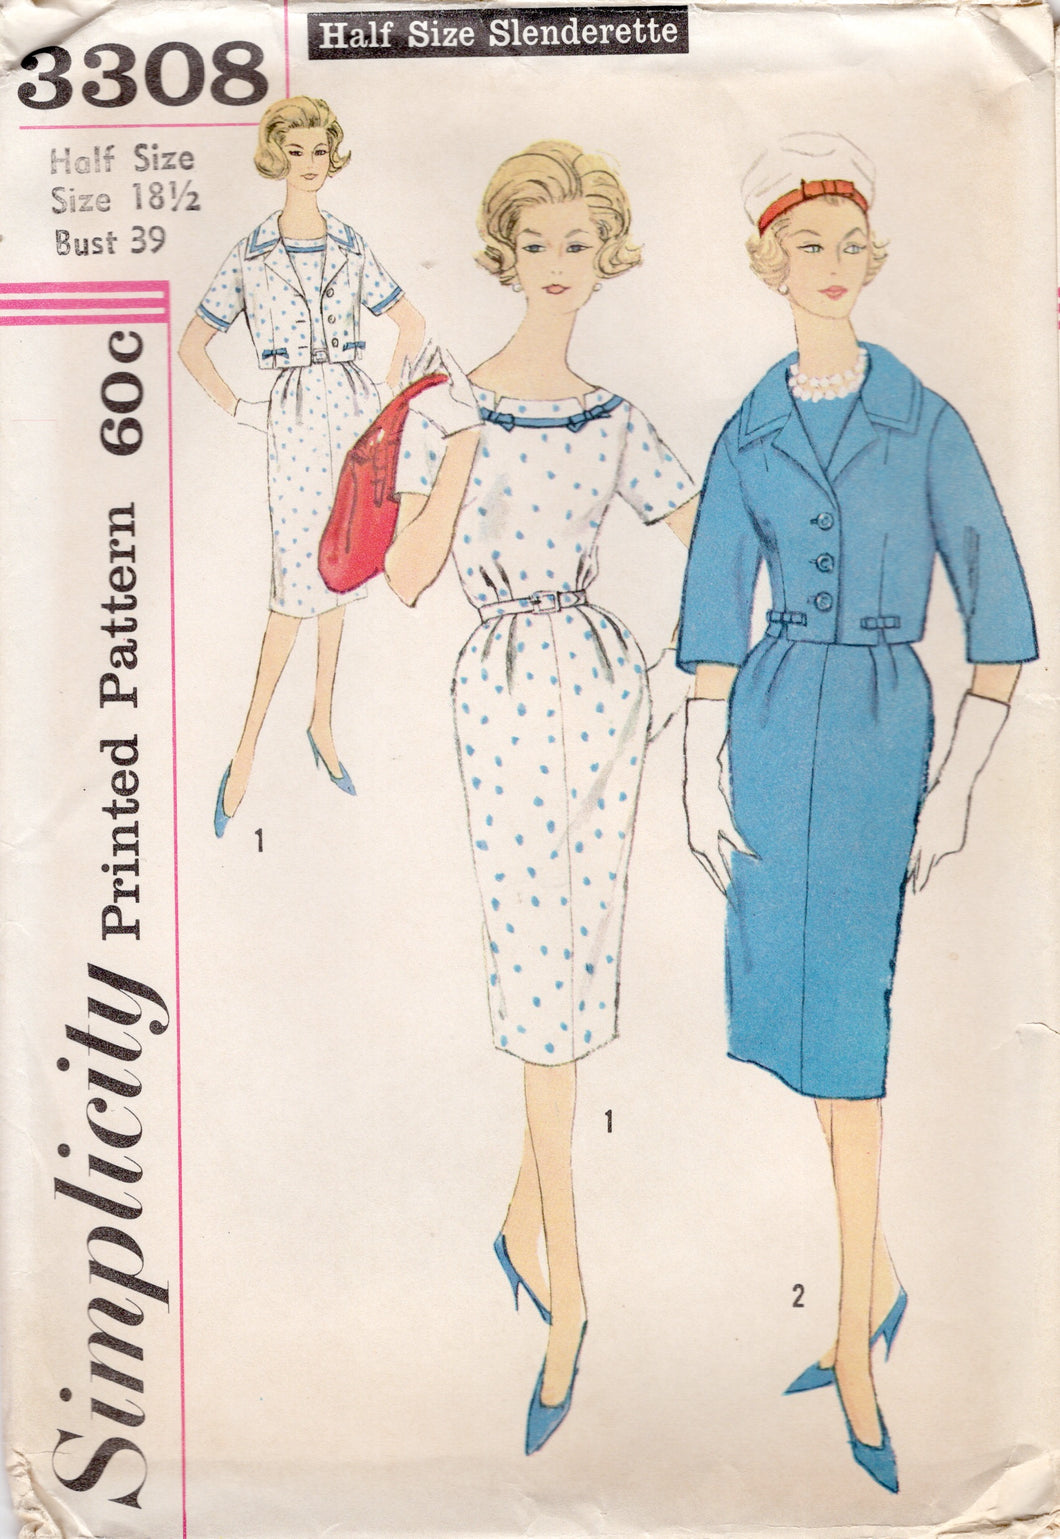 1960's Simplicity Sheath Dress with Notched Neckline Neckline and Bolero Jacket Pattern - Bust 39